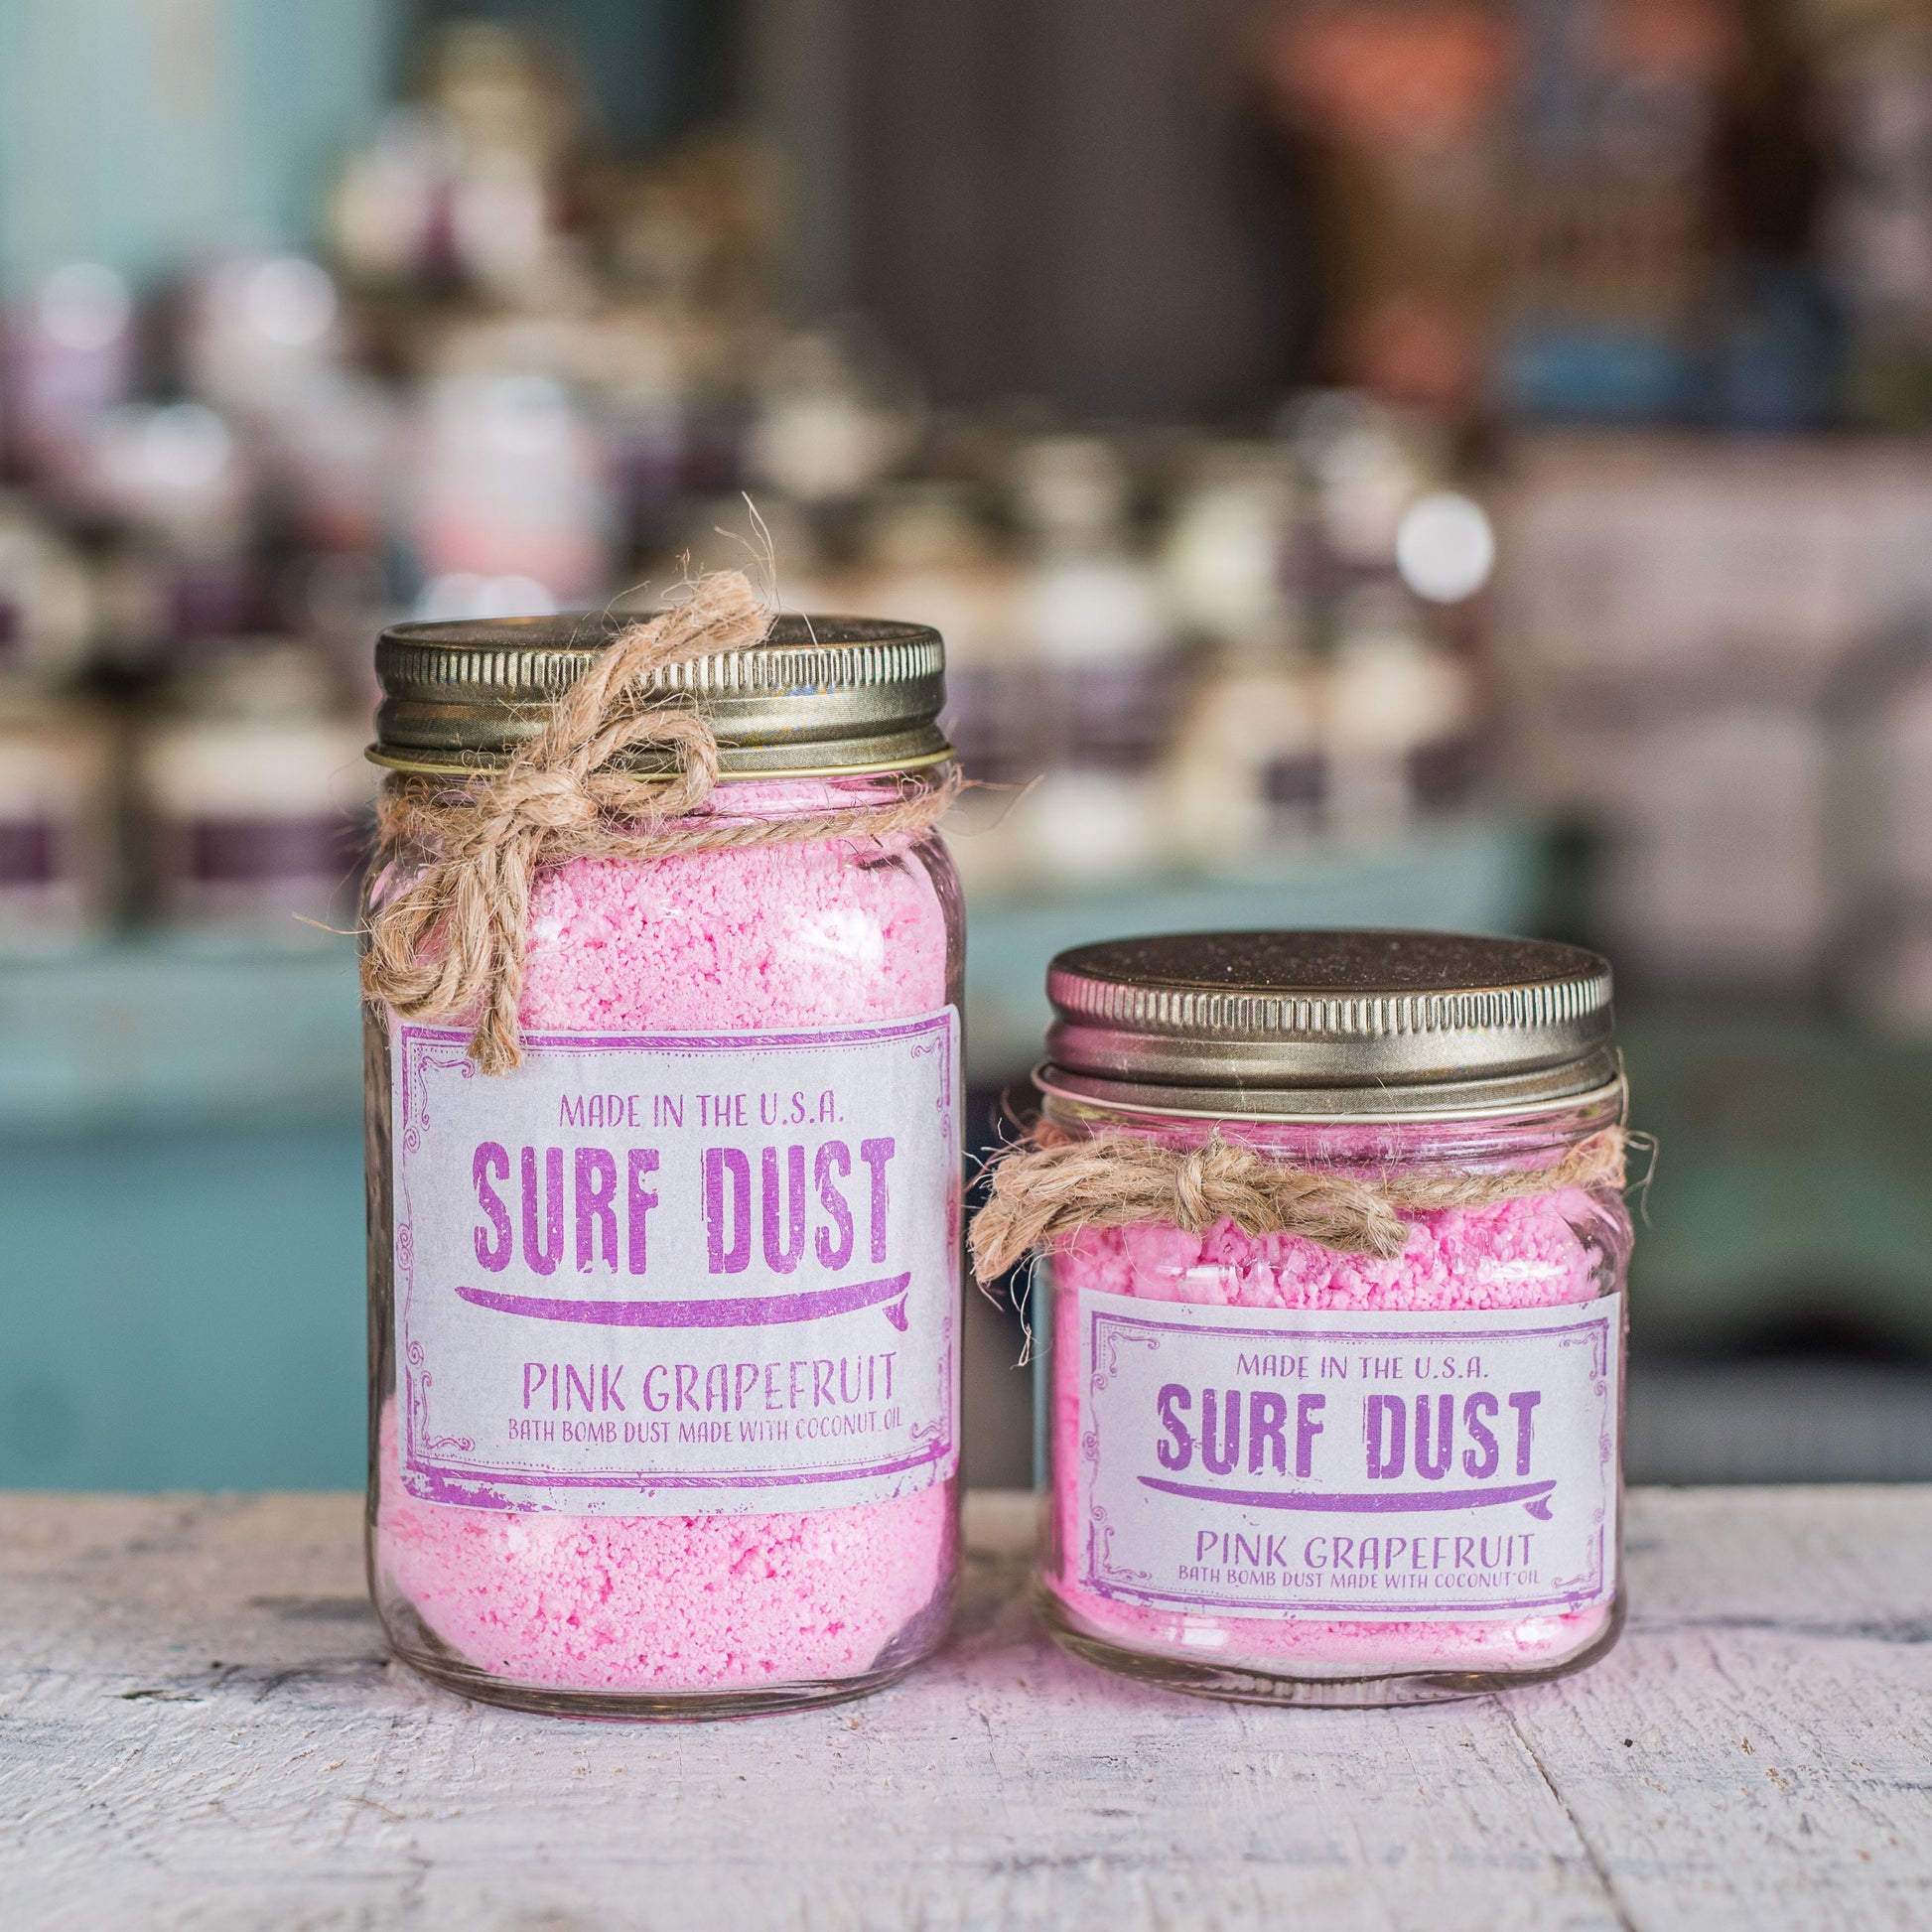 Surf Dust Pink grapefruit bath bomb in a jar